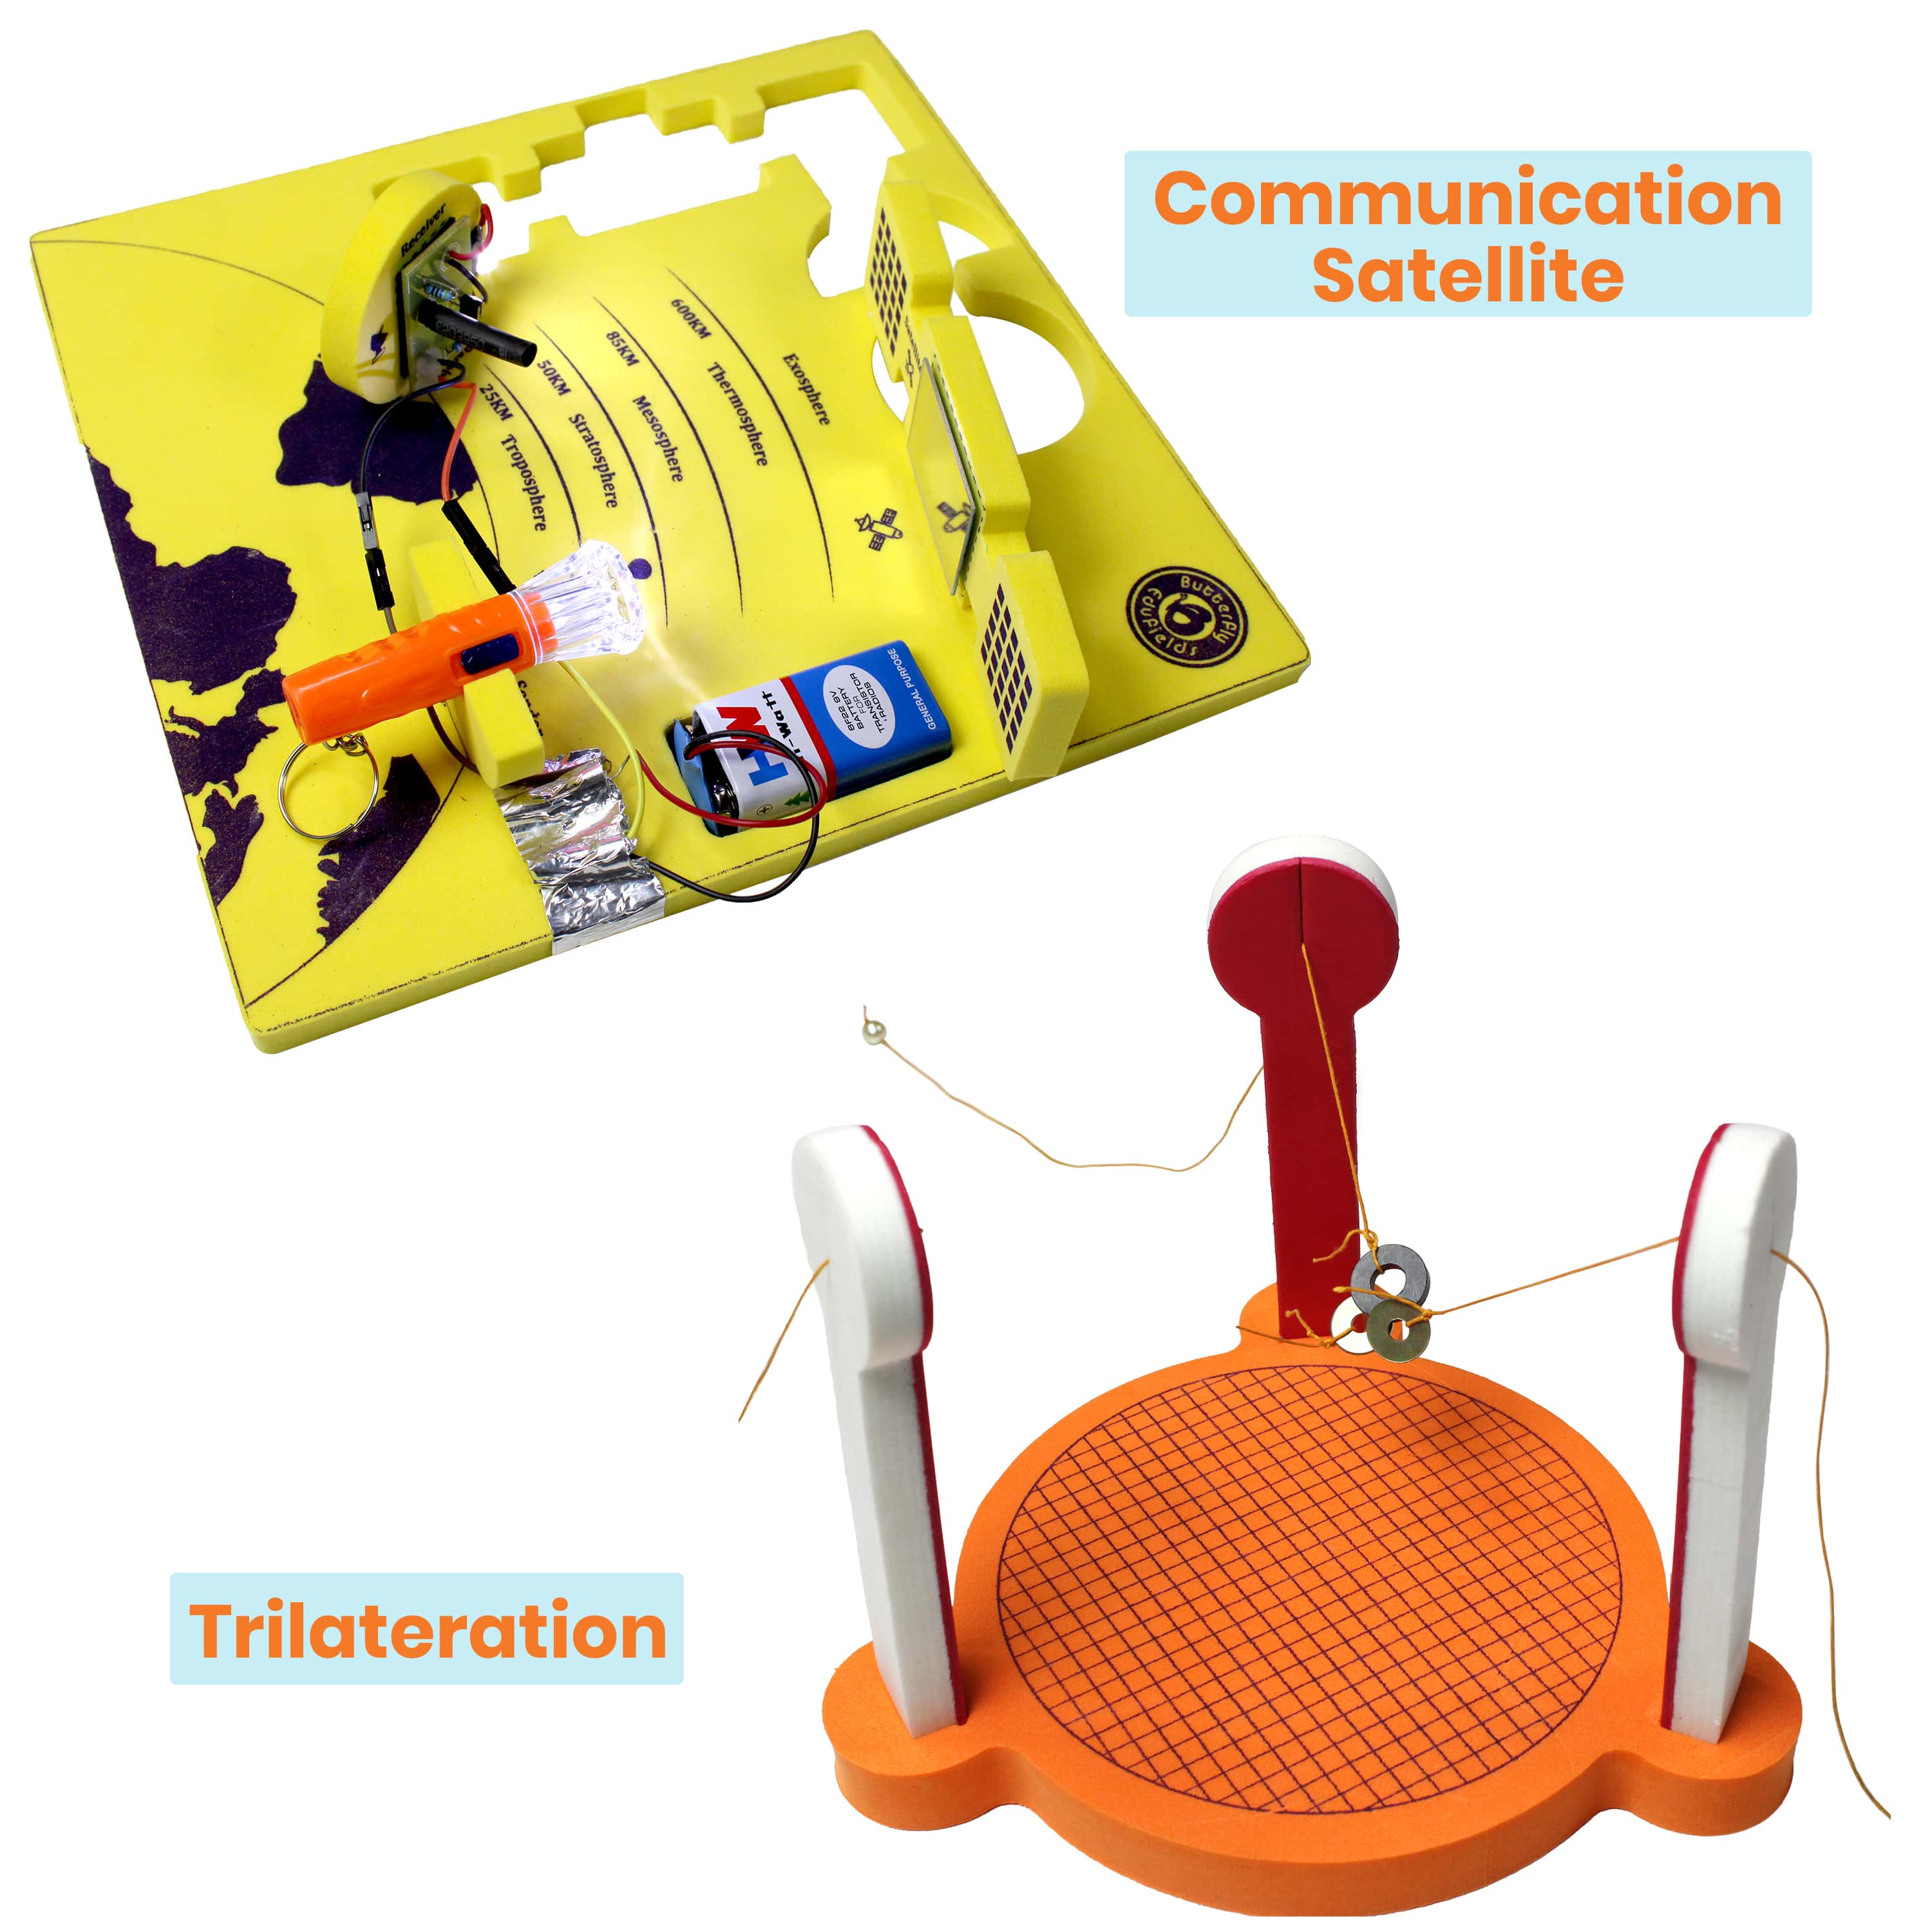 Make a mini satellite communication system model